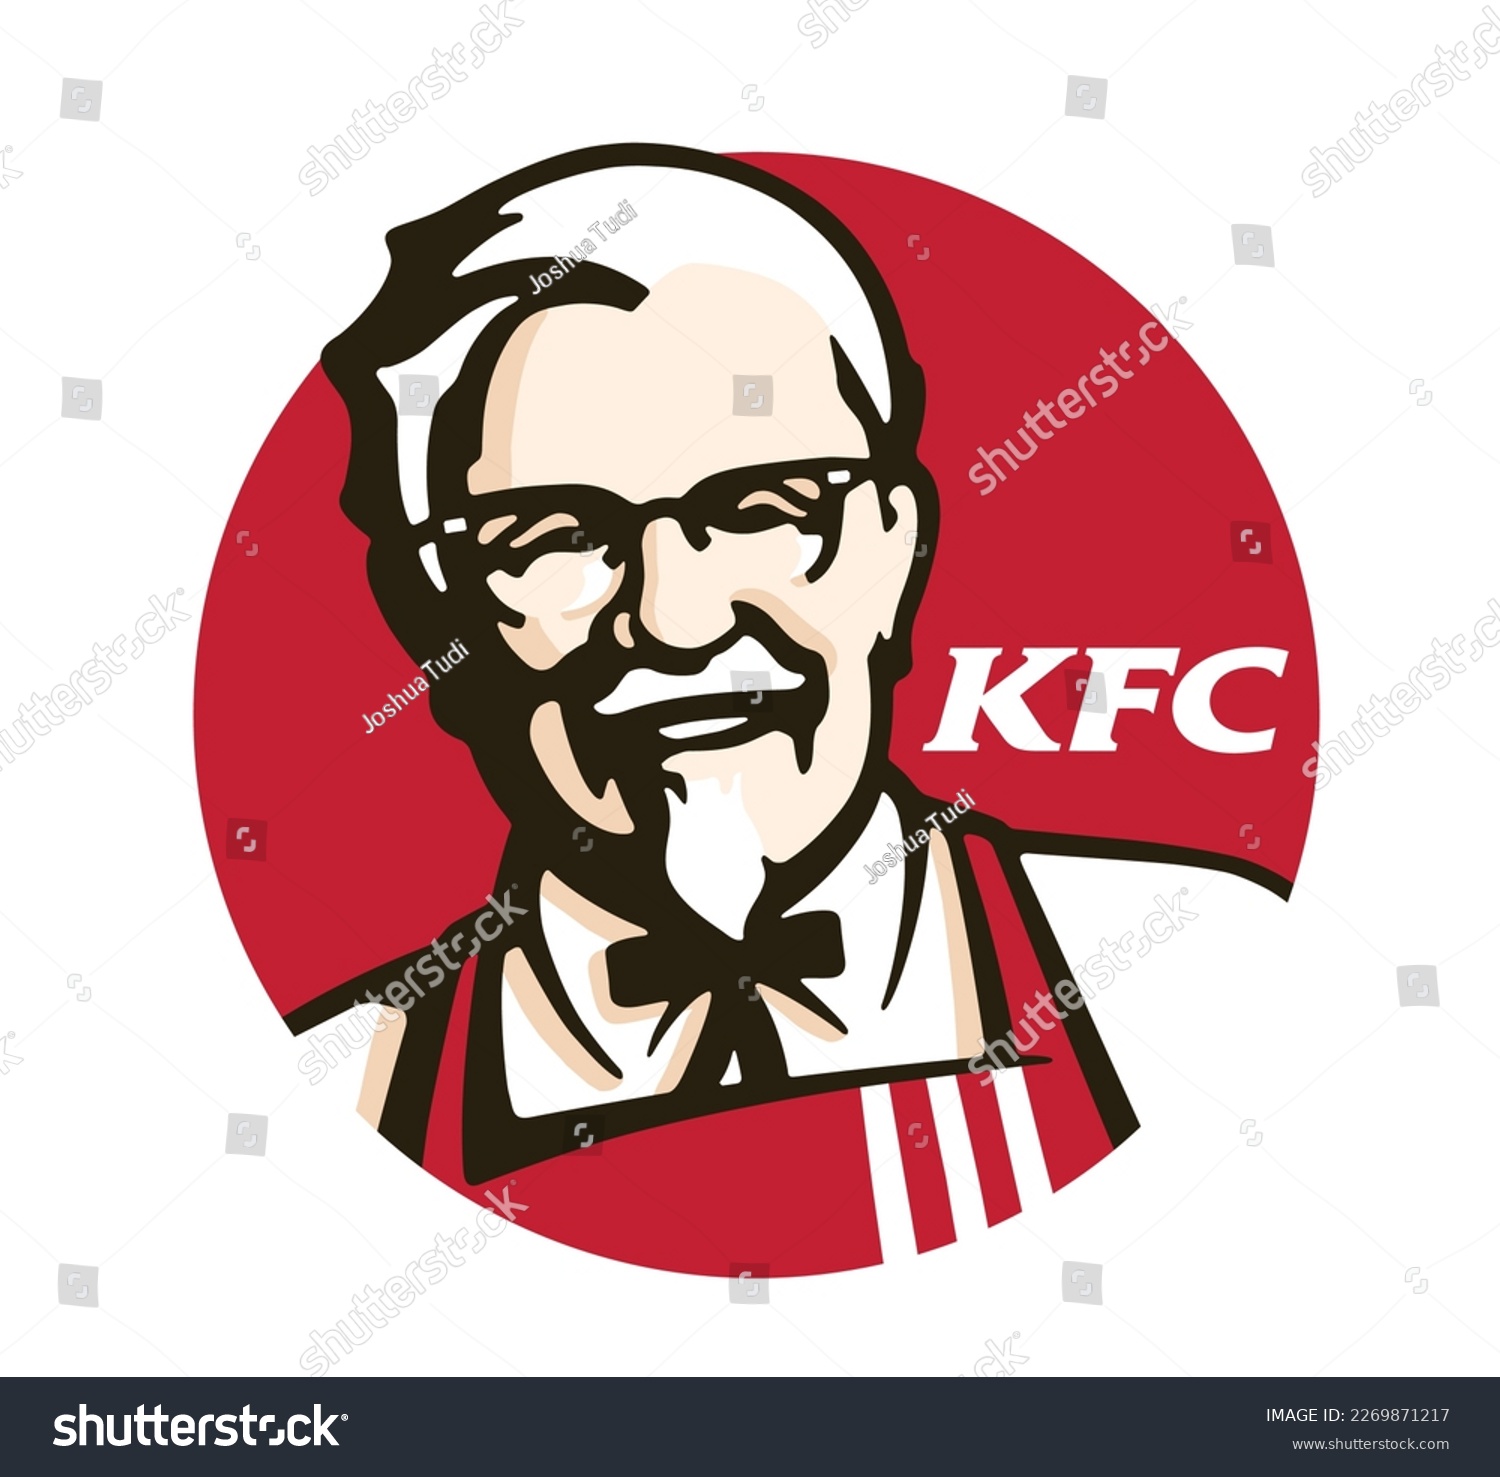 KFC to go vegetarian in Ayodhya